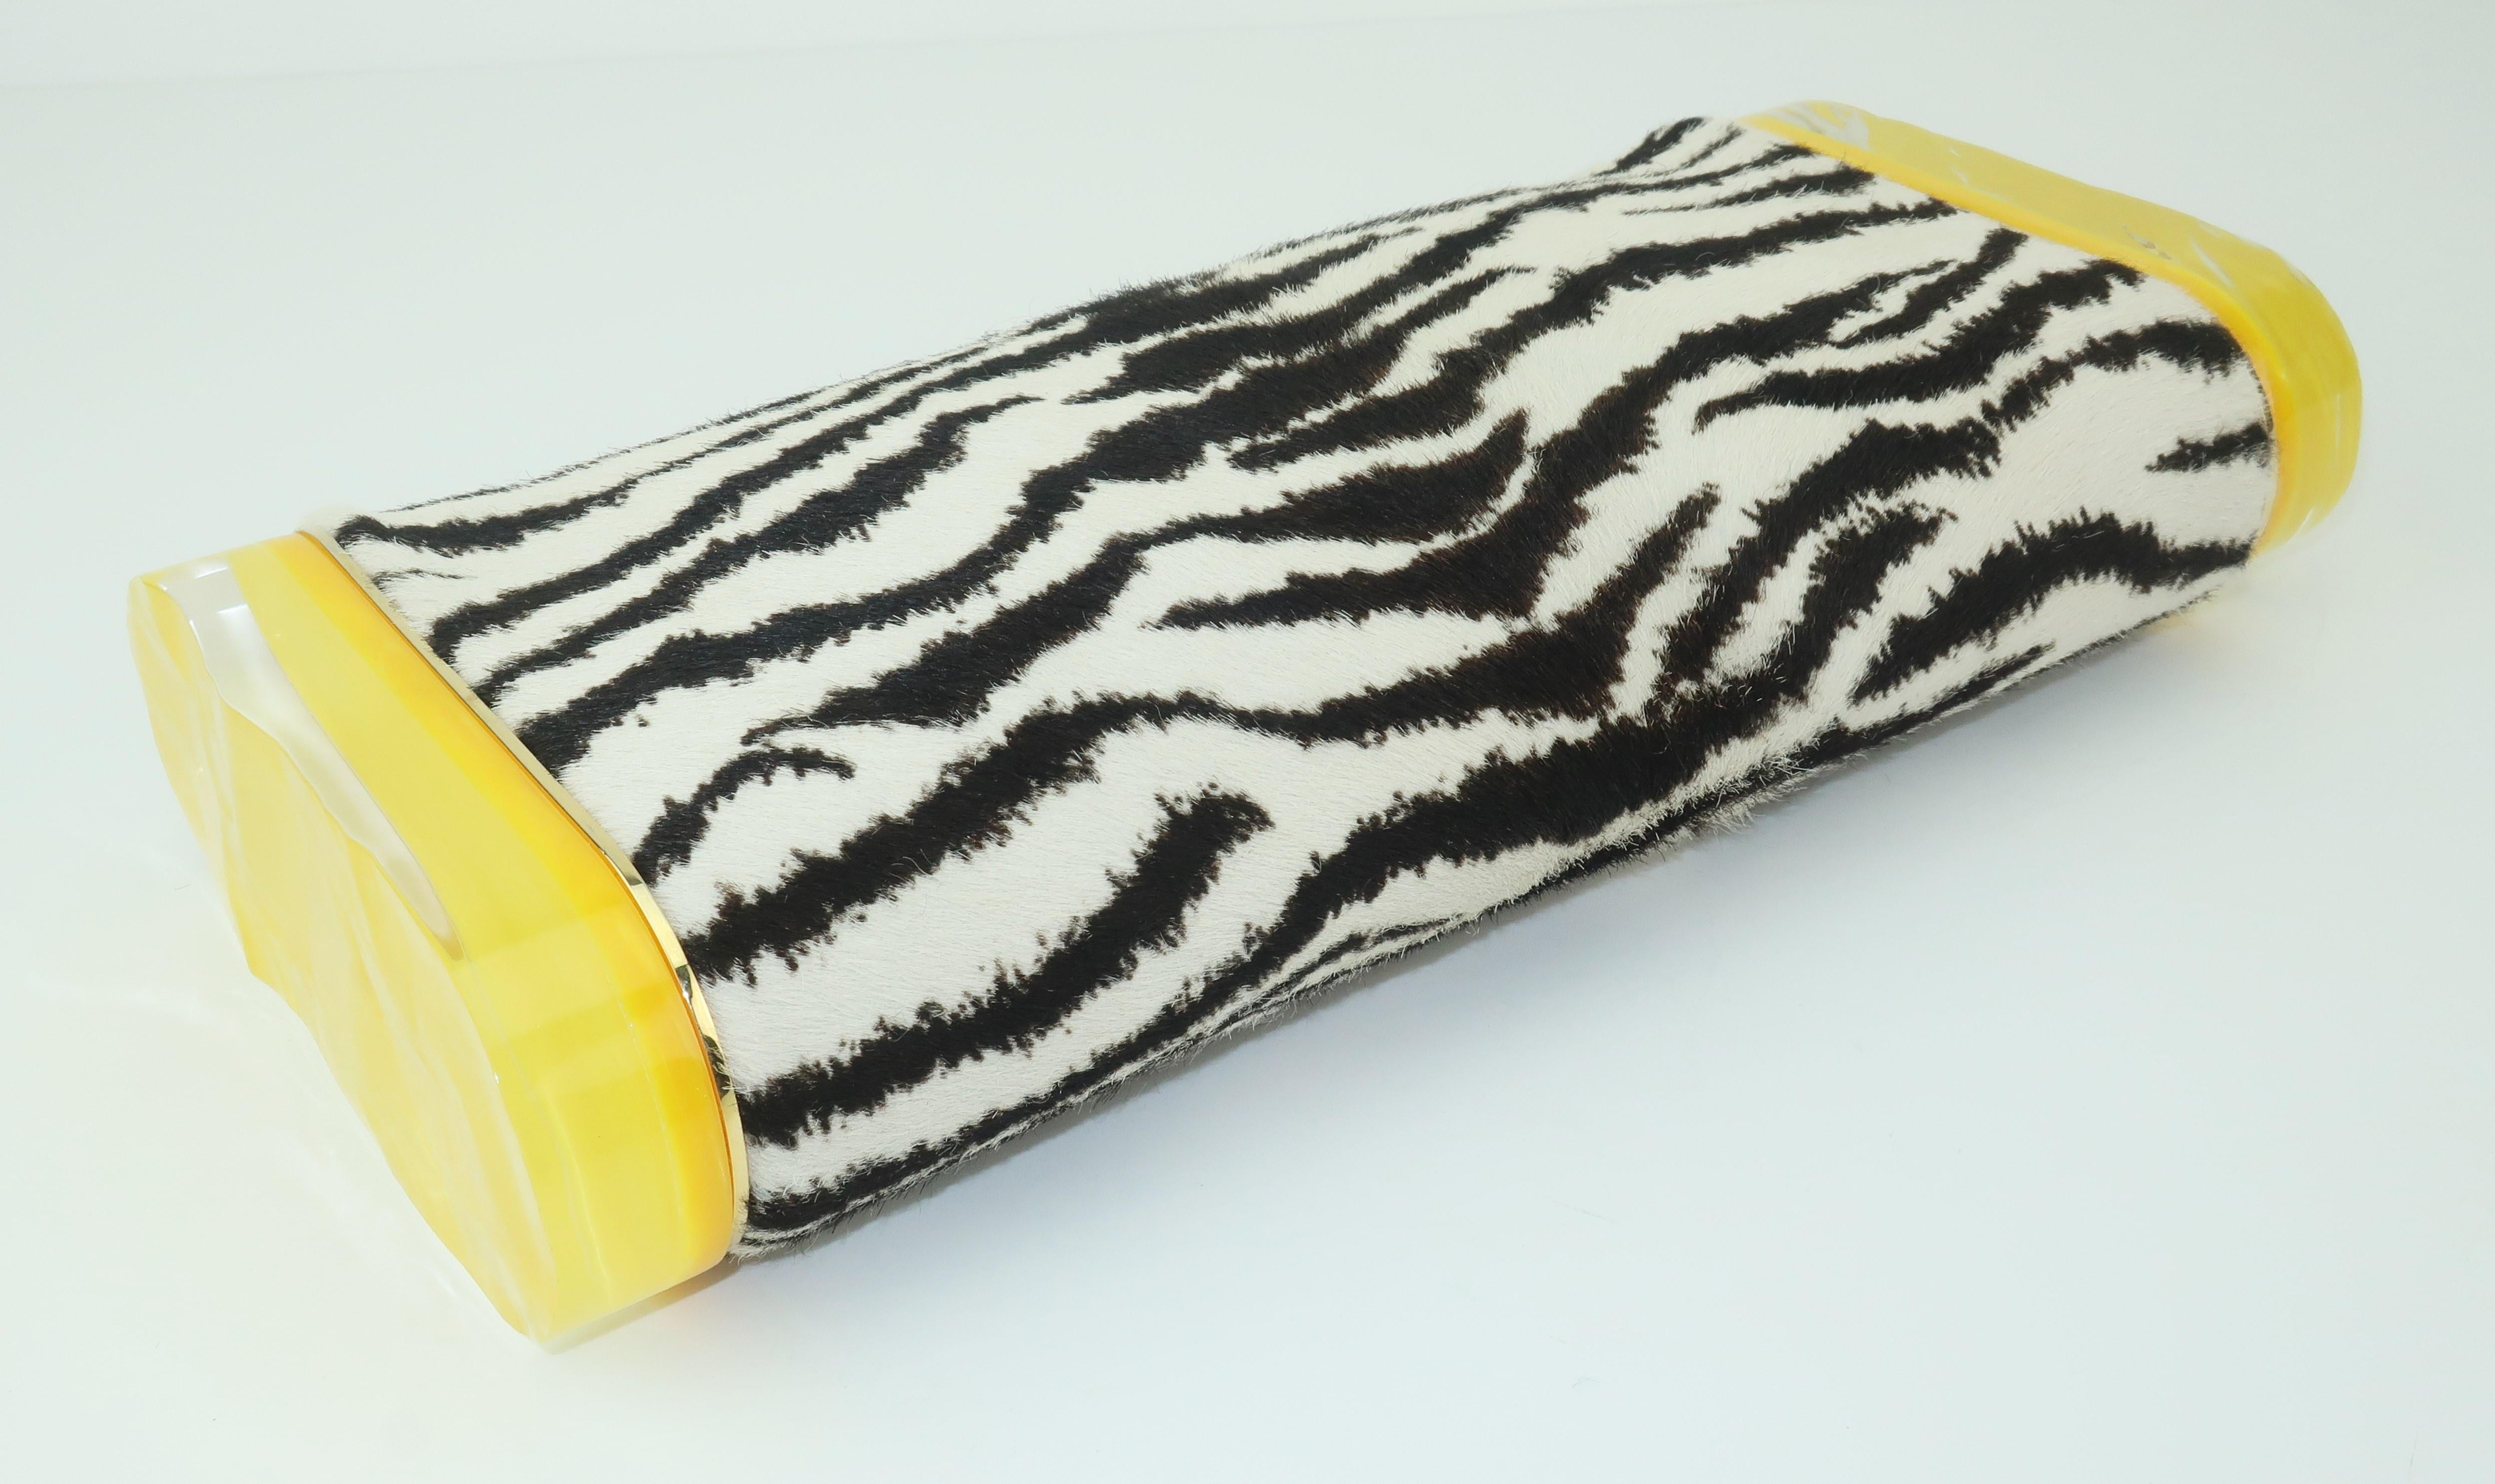 Beige Edie Parker Zebra Print Calf Hair Clutch Handbag With Acrylic Details